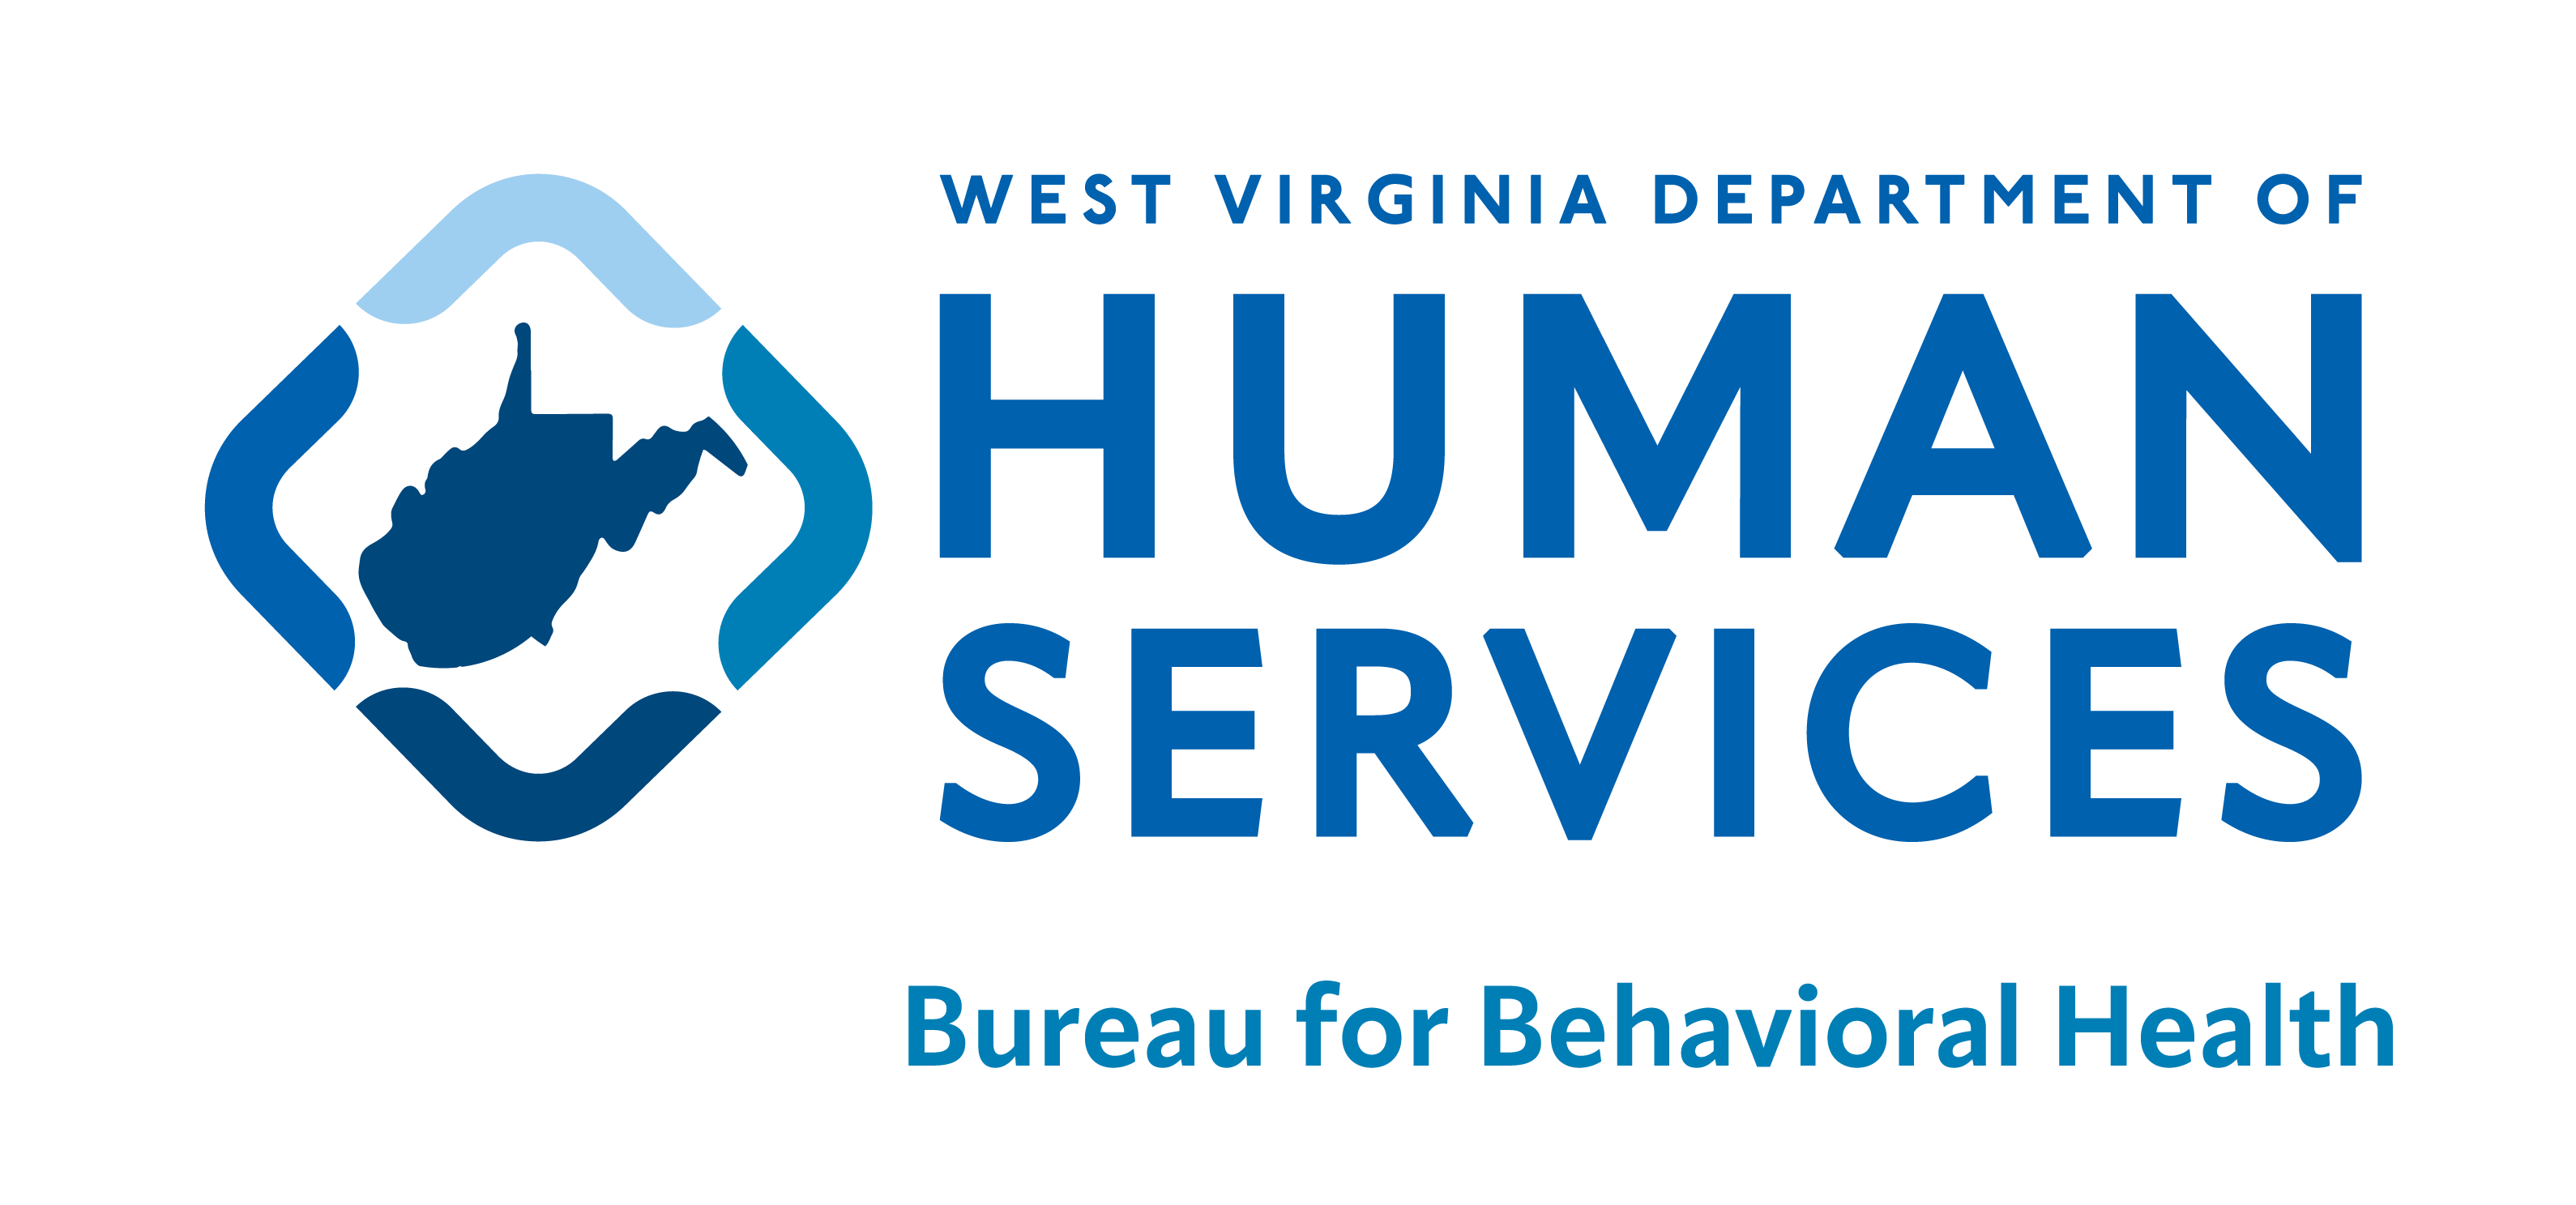 West Virginia Department of Health & Human Resources - Bureau for Behavioral Health